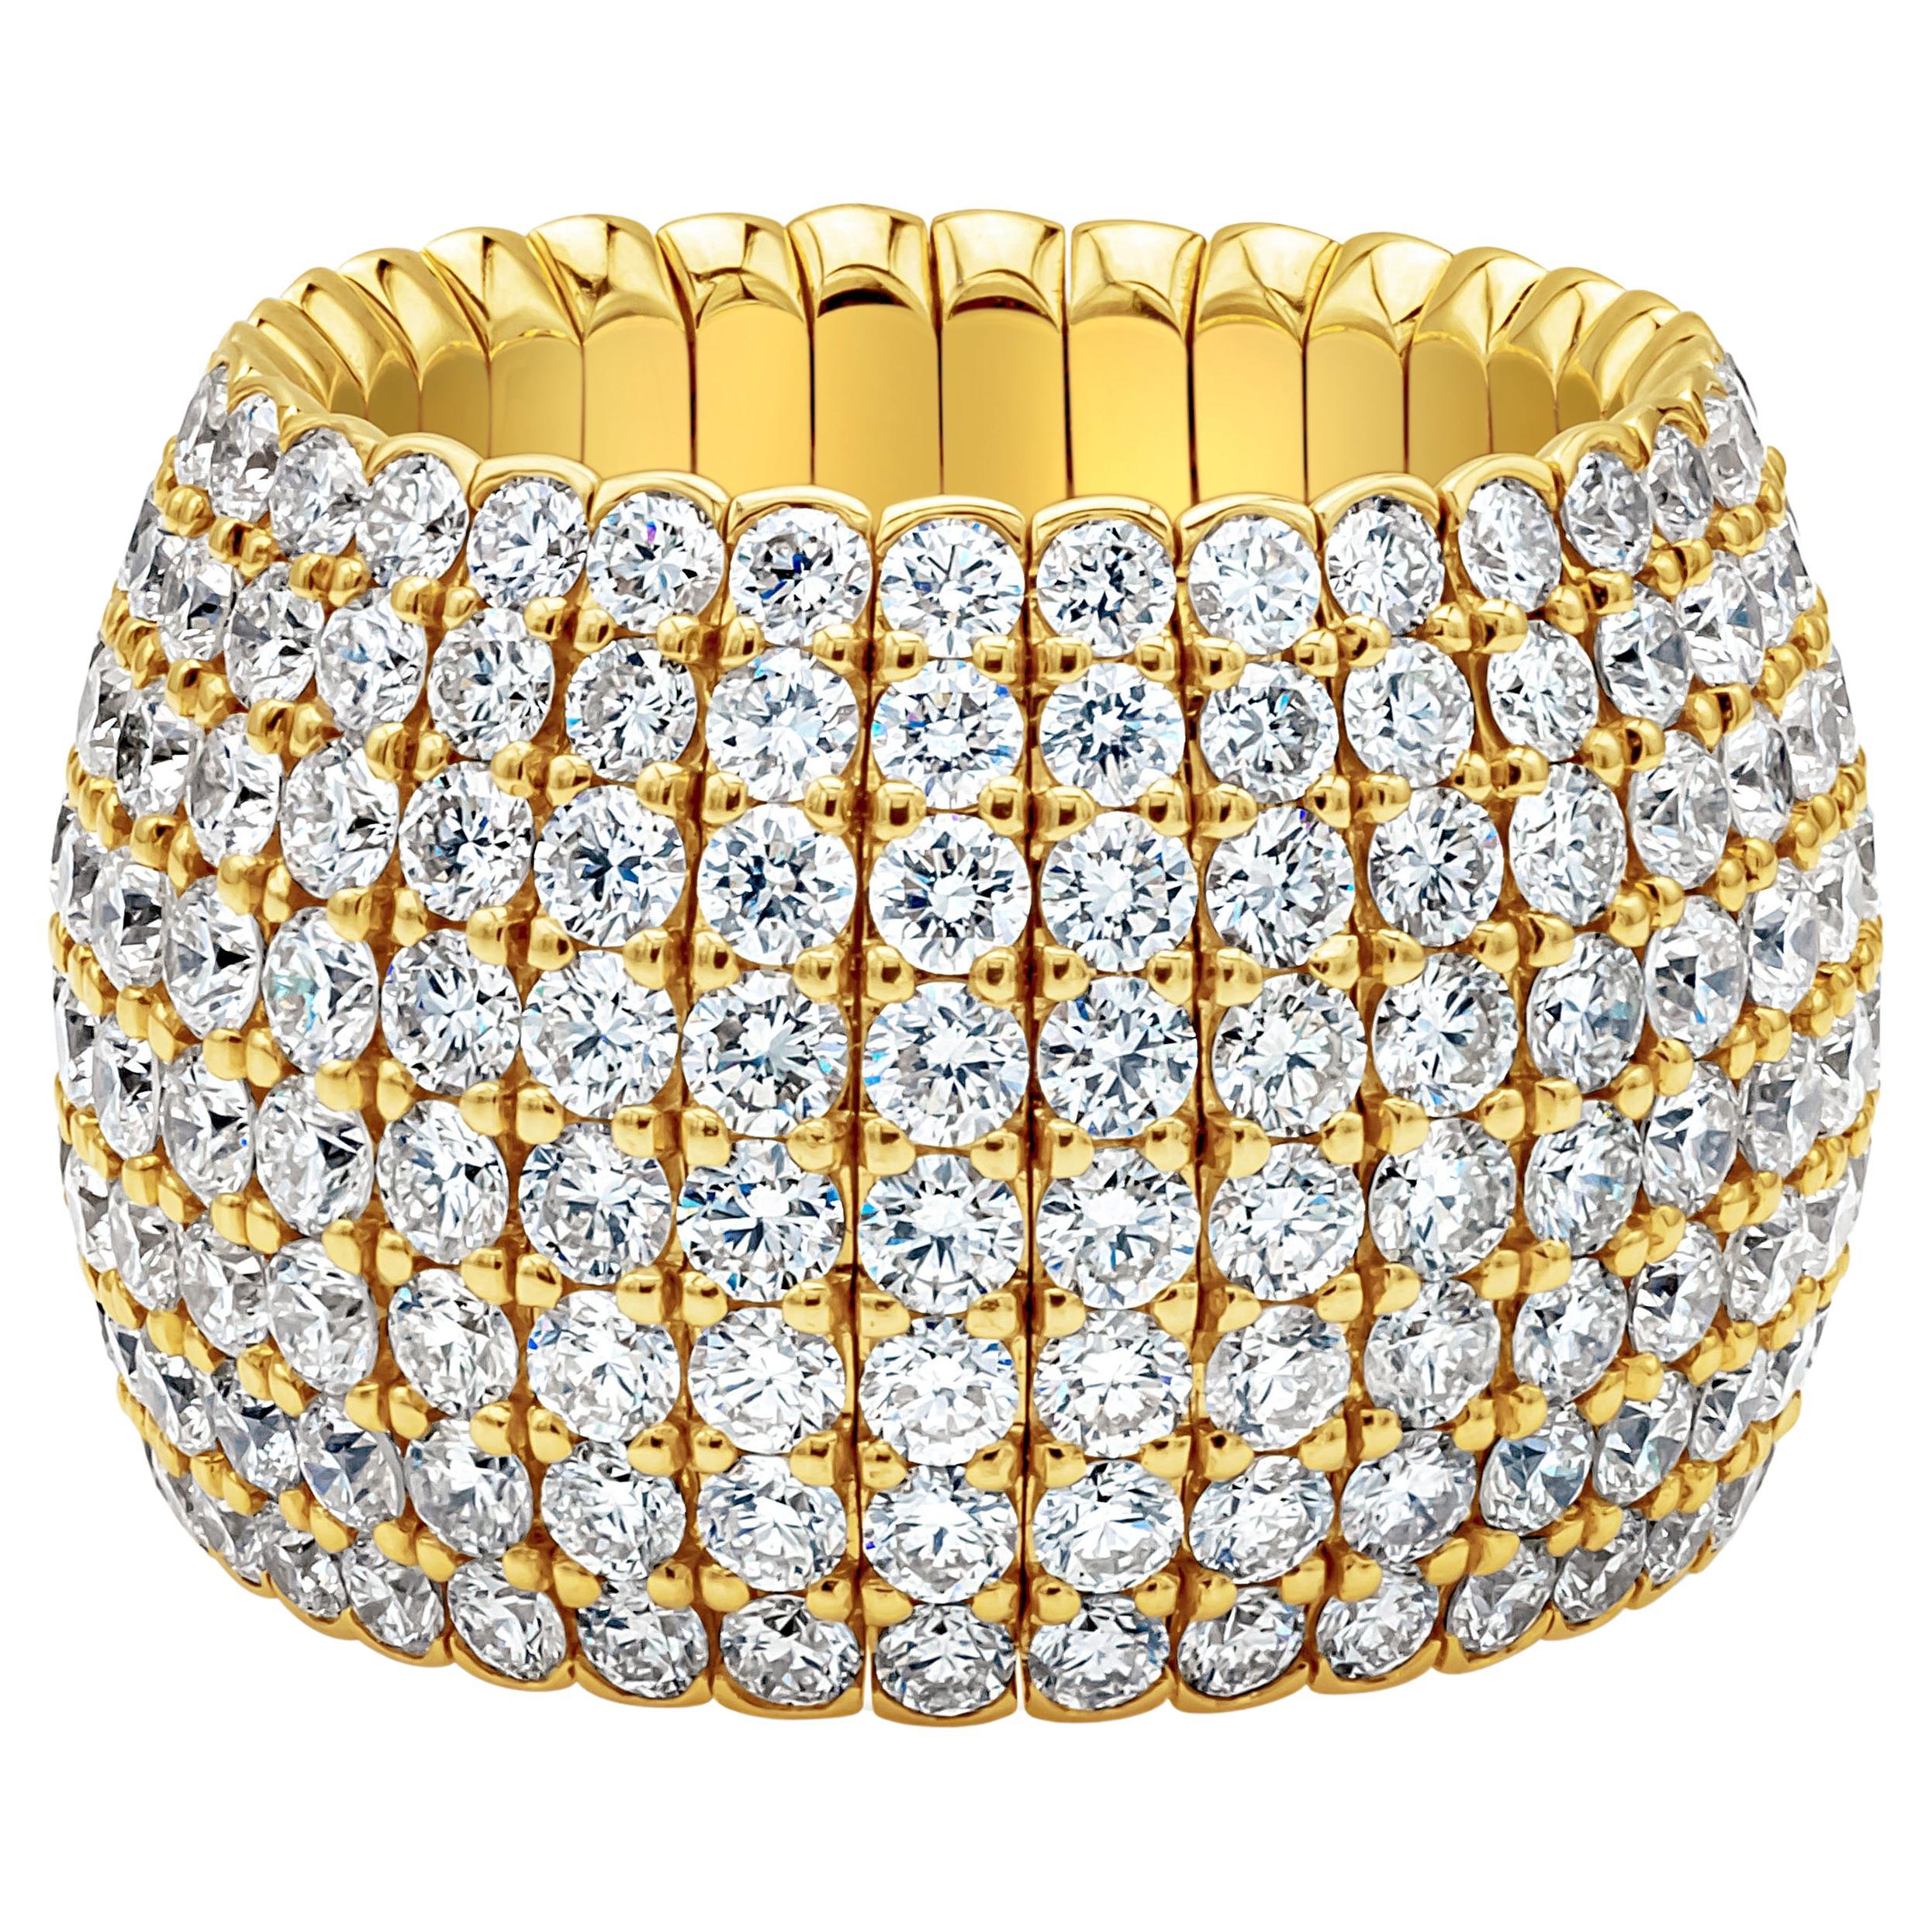 Roman Malakov 8.11 Carats Total Round Cut Diamond Flexible Pave Fashion Ring For Sale